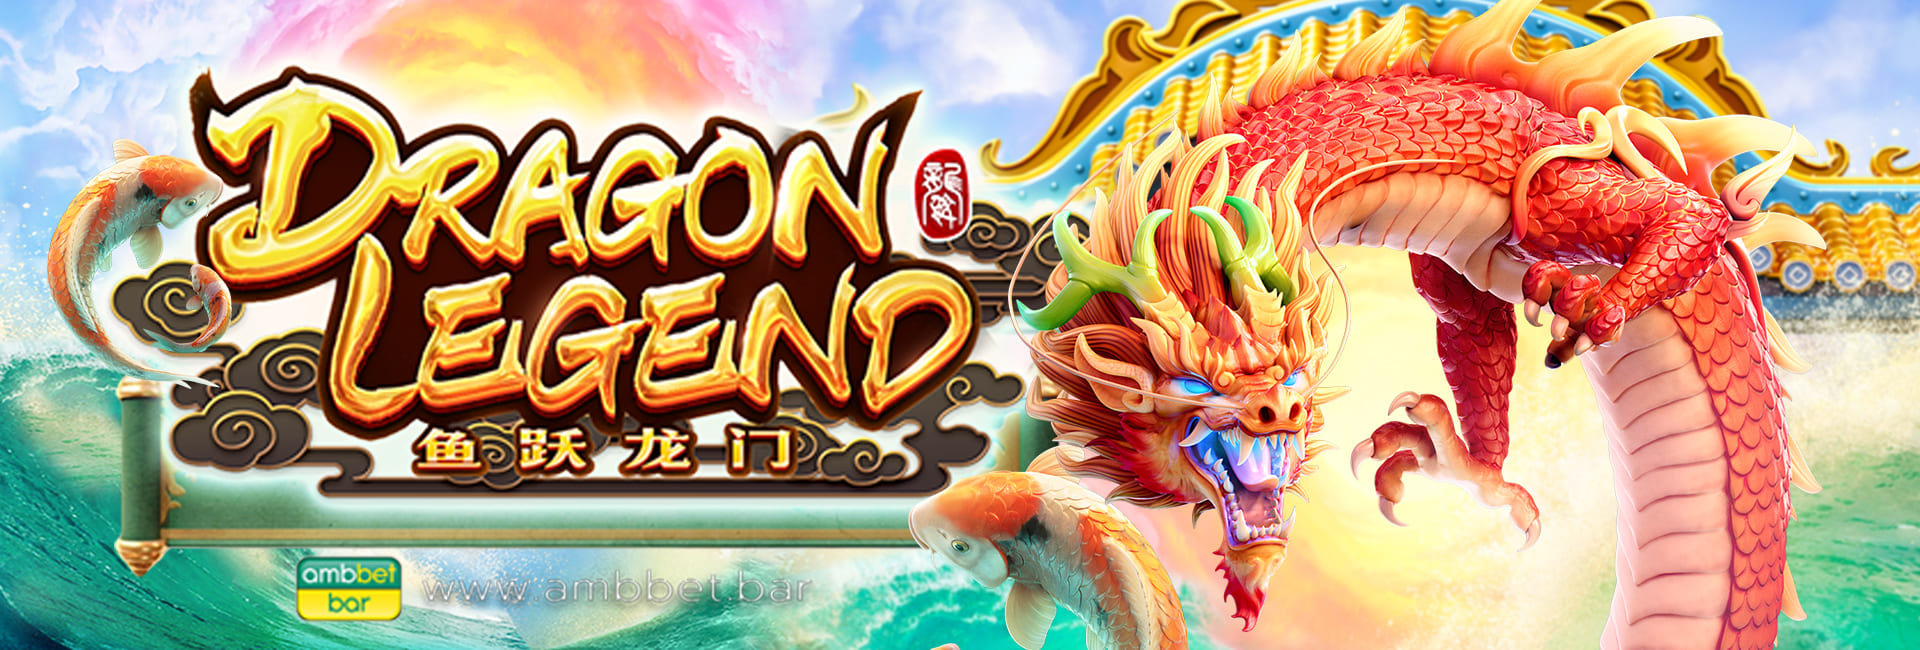 Dragon Legend banner copy